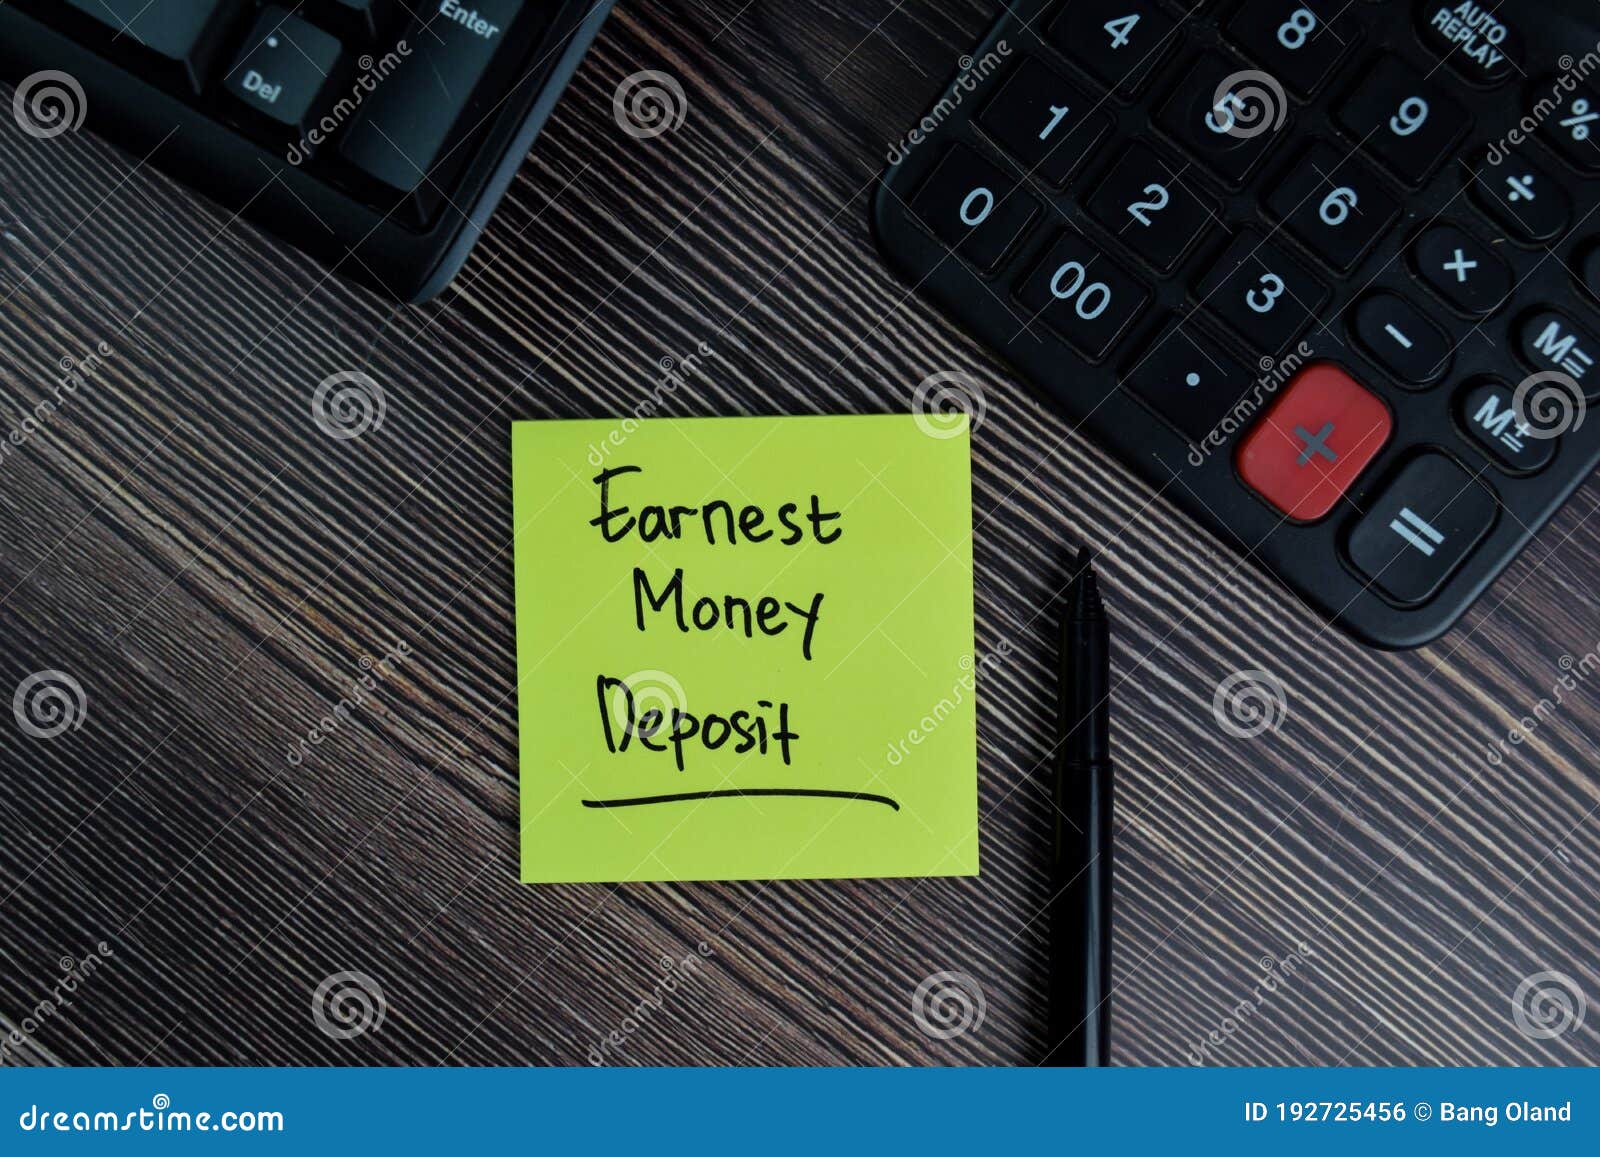 earnest money deposit write on sticky notes  on office desk